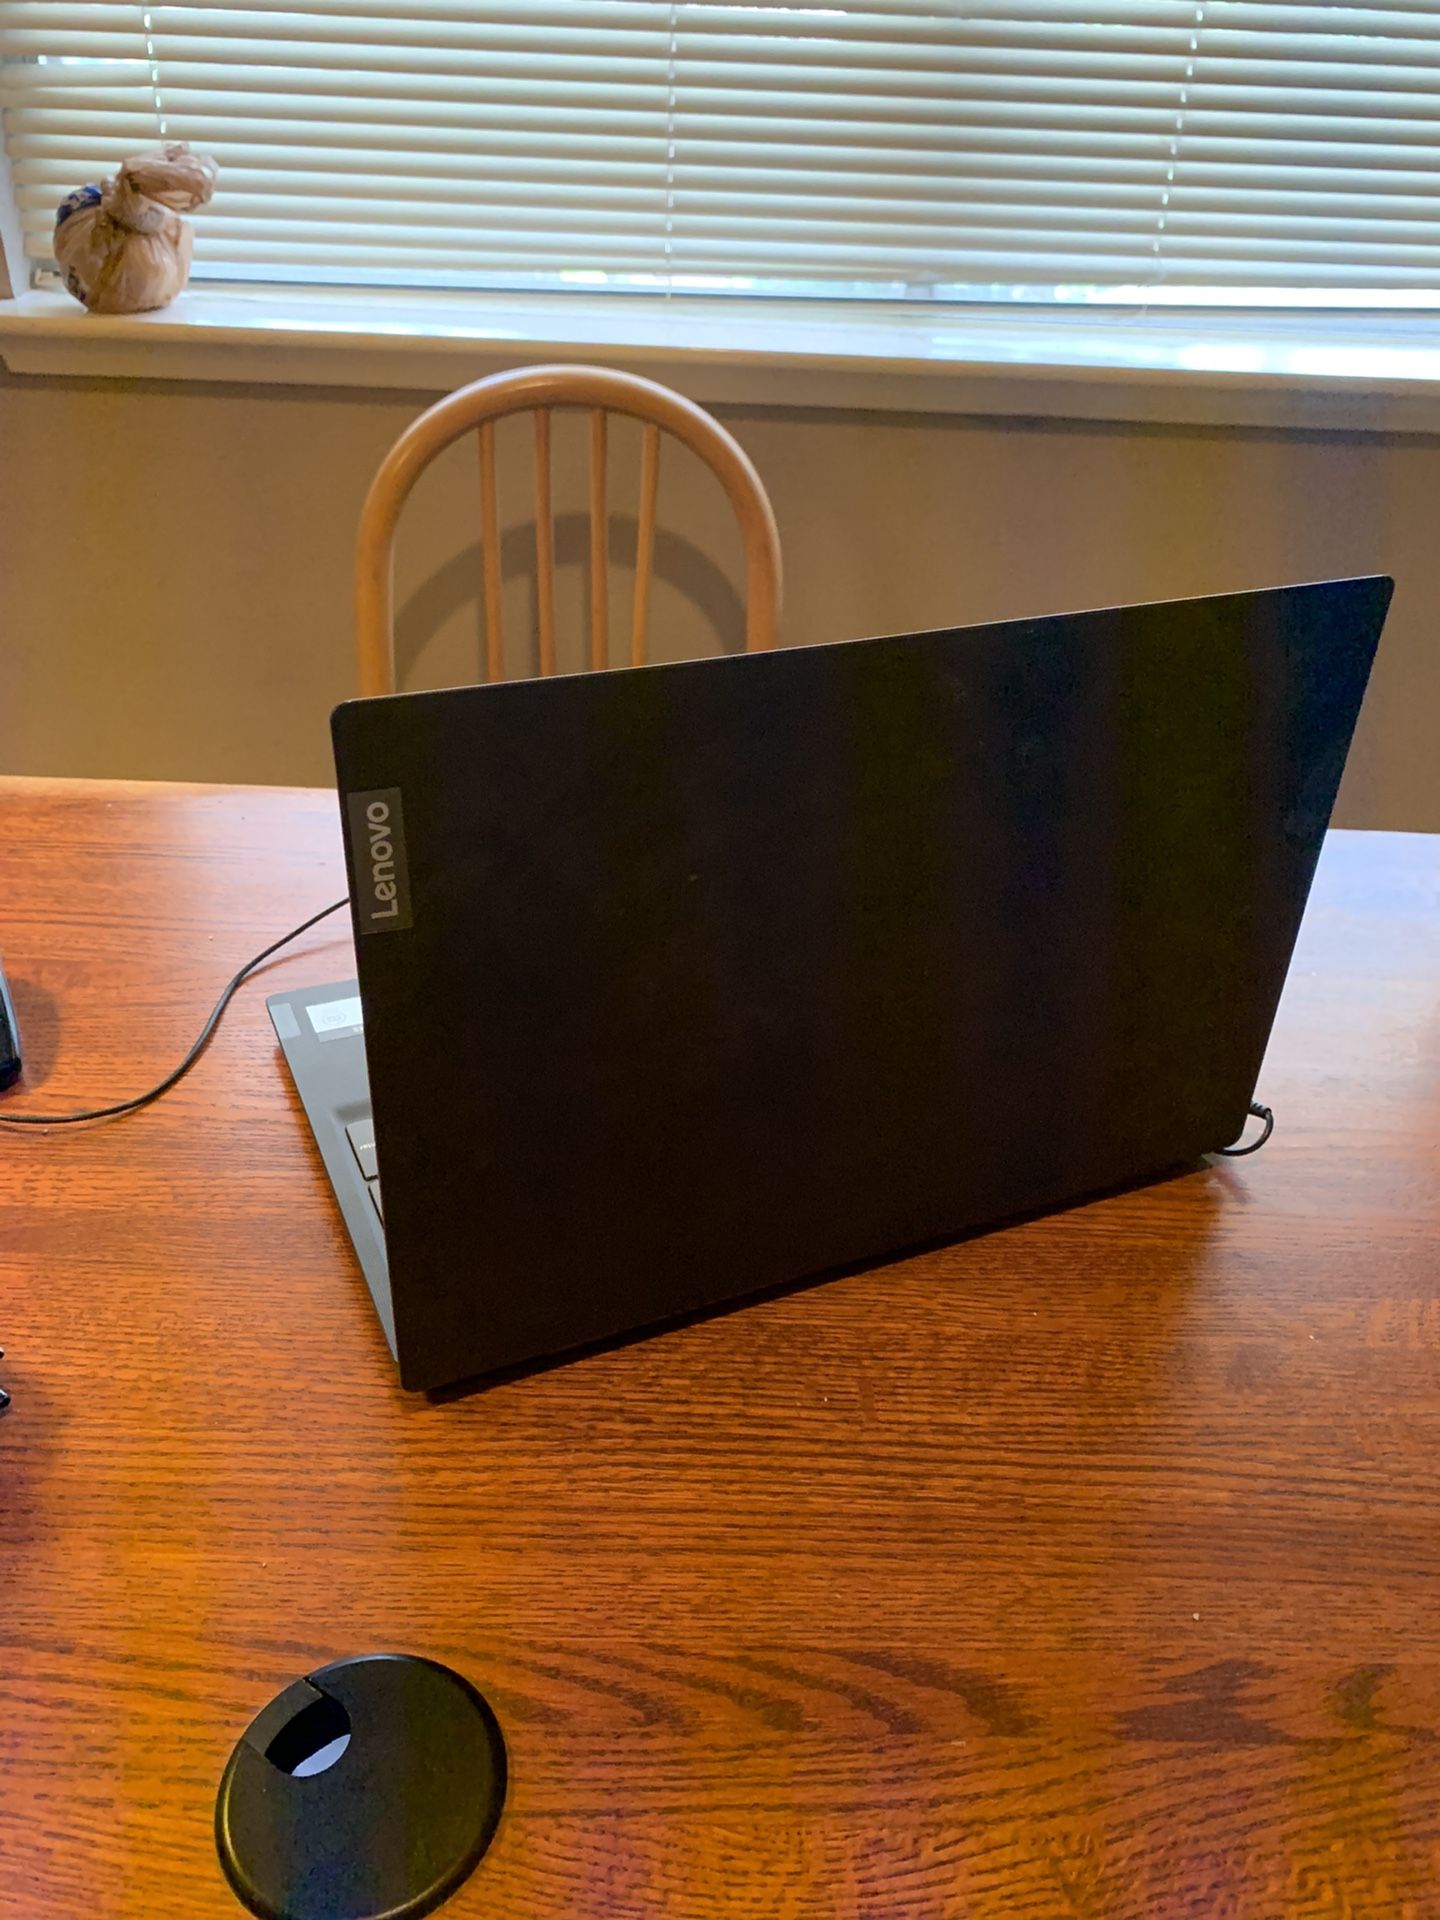 Lenovo ideapad laptop